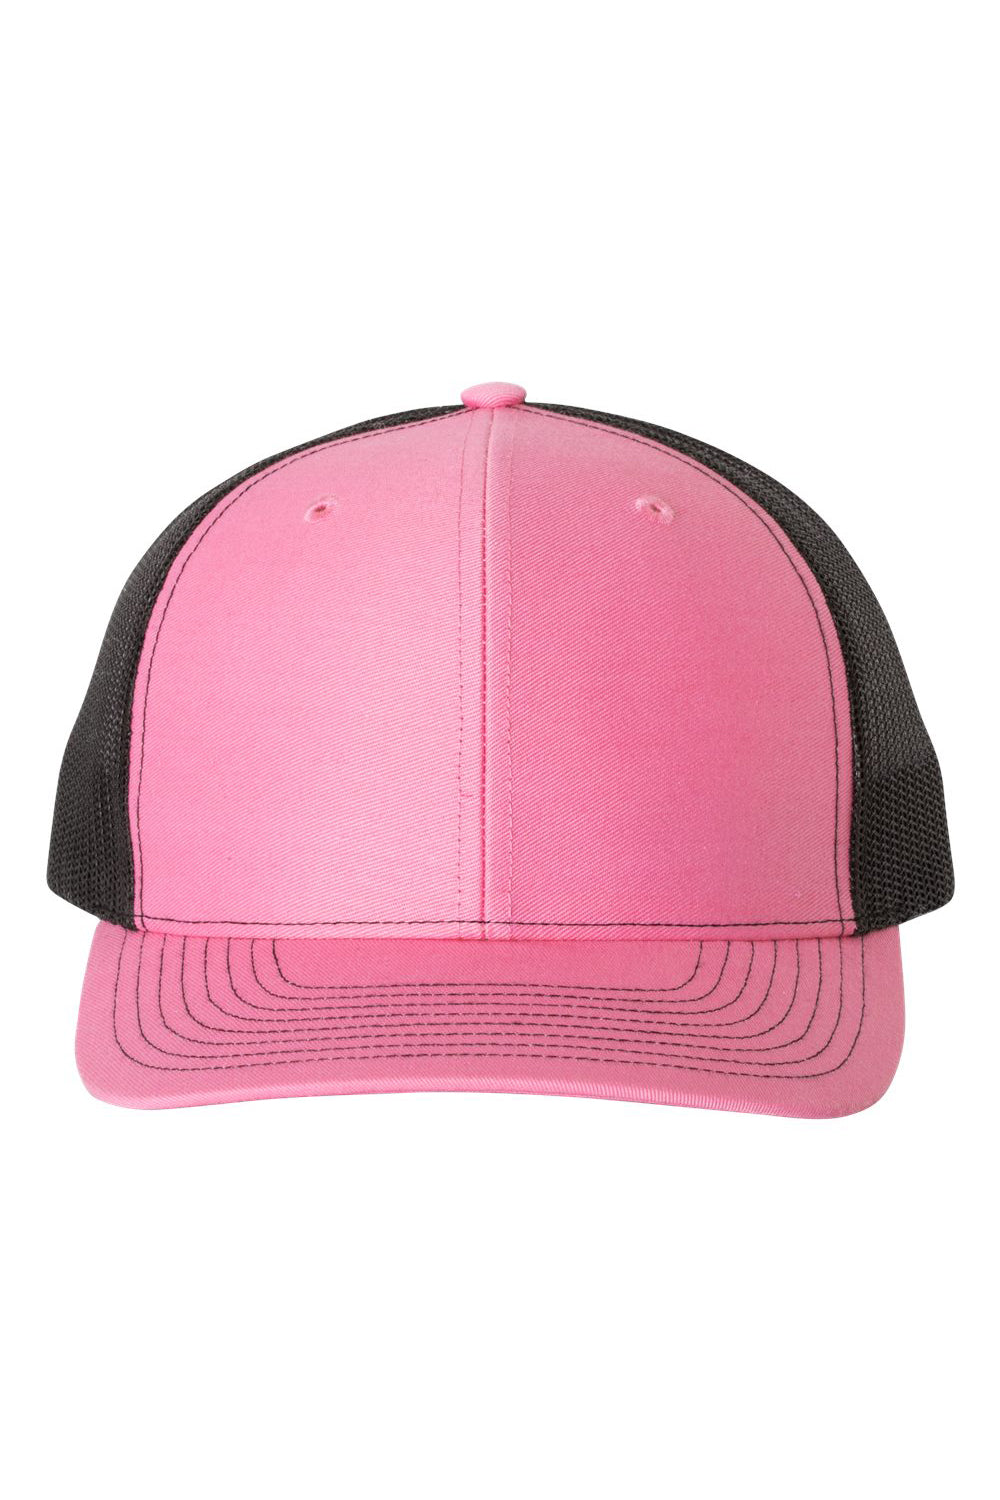 Richardson 112 Mens Snapback Trucker Hat Hot Pink/Black Flat Front